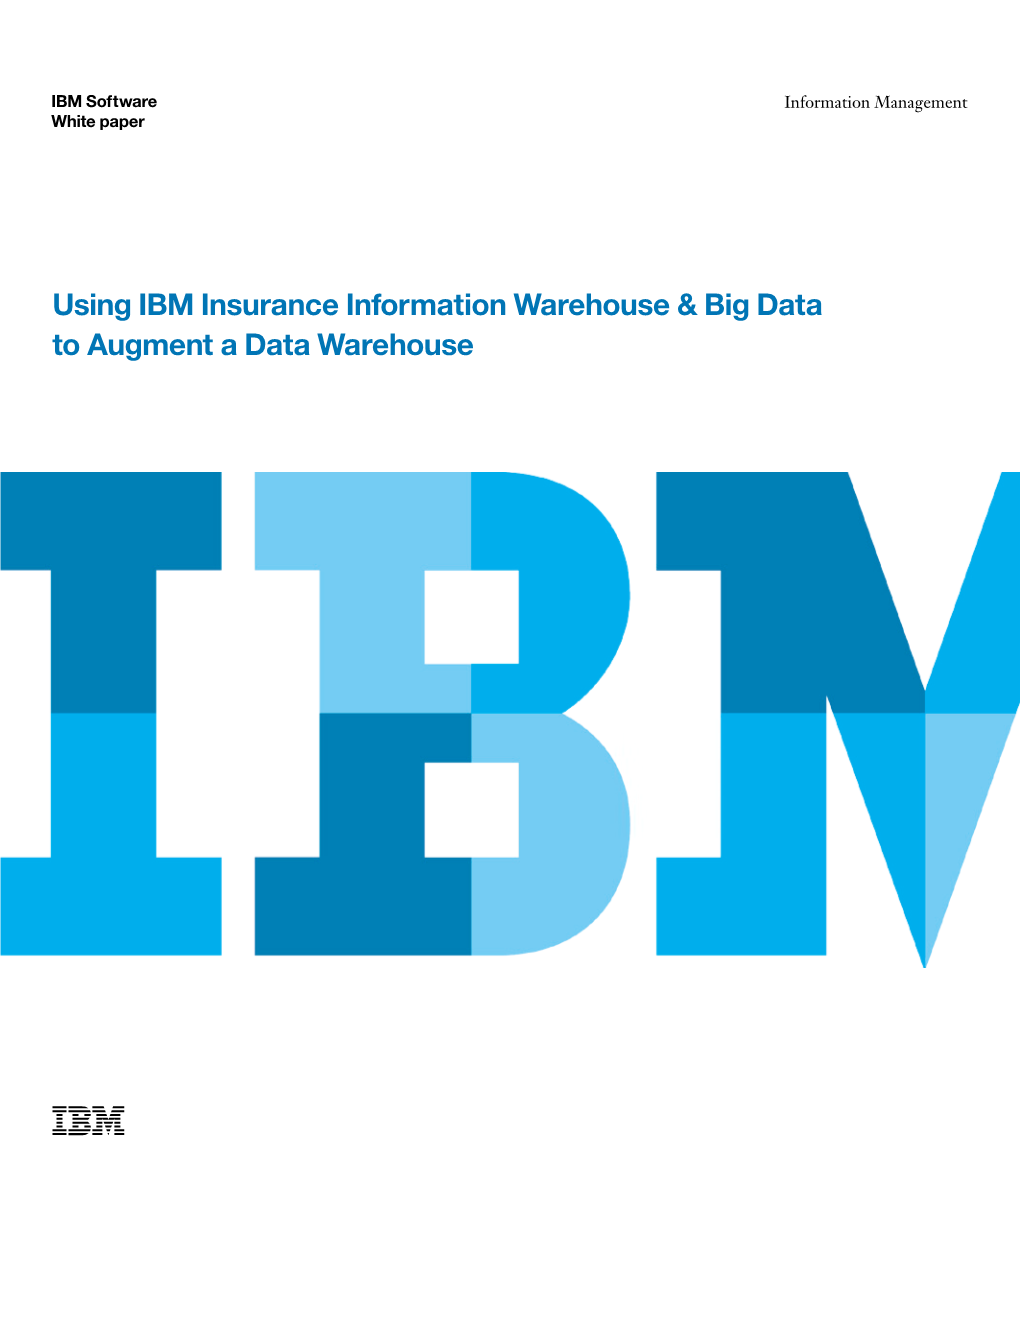 Using IBM Insurance Information Warehouse & Big Data to Augment